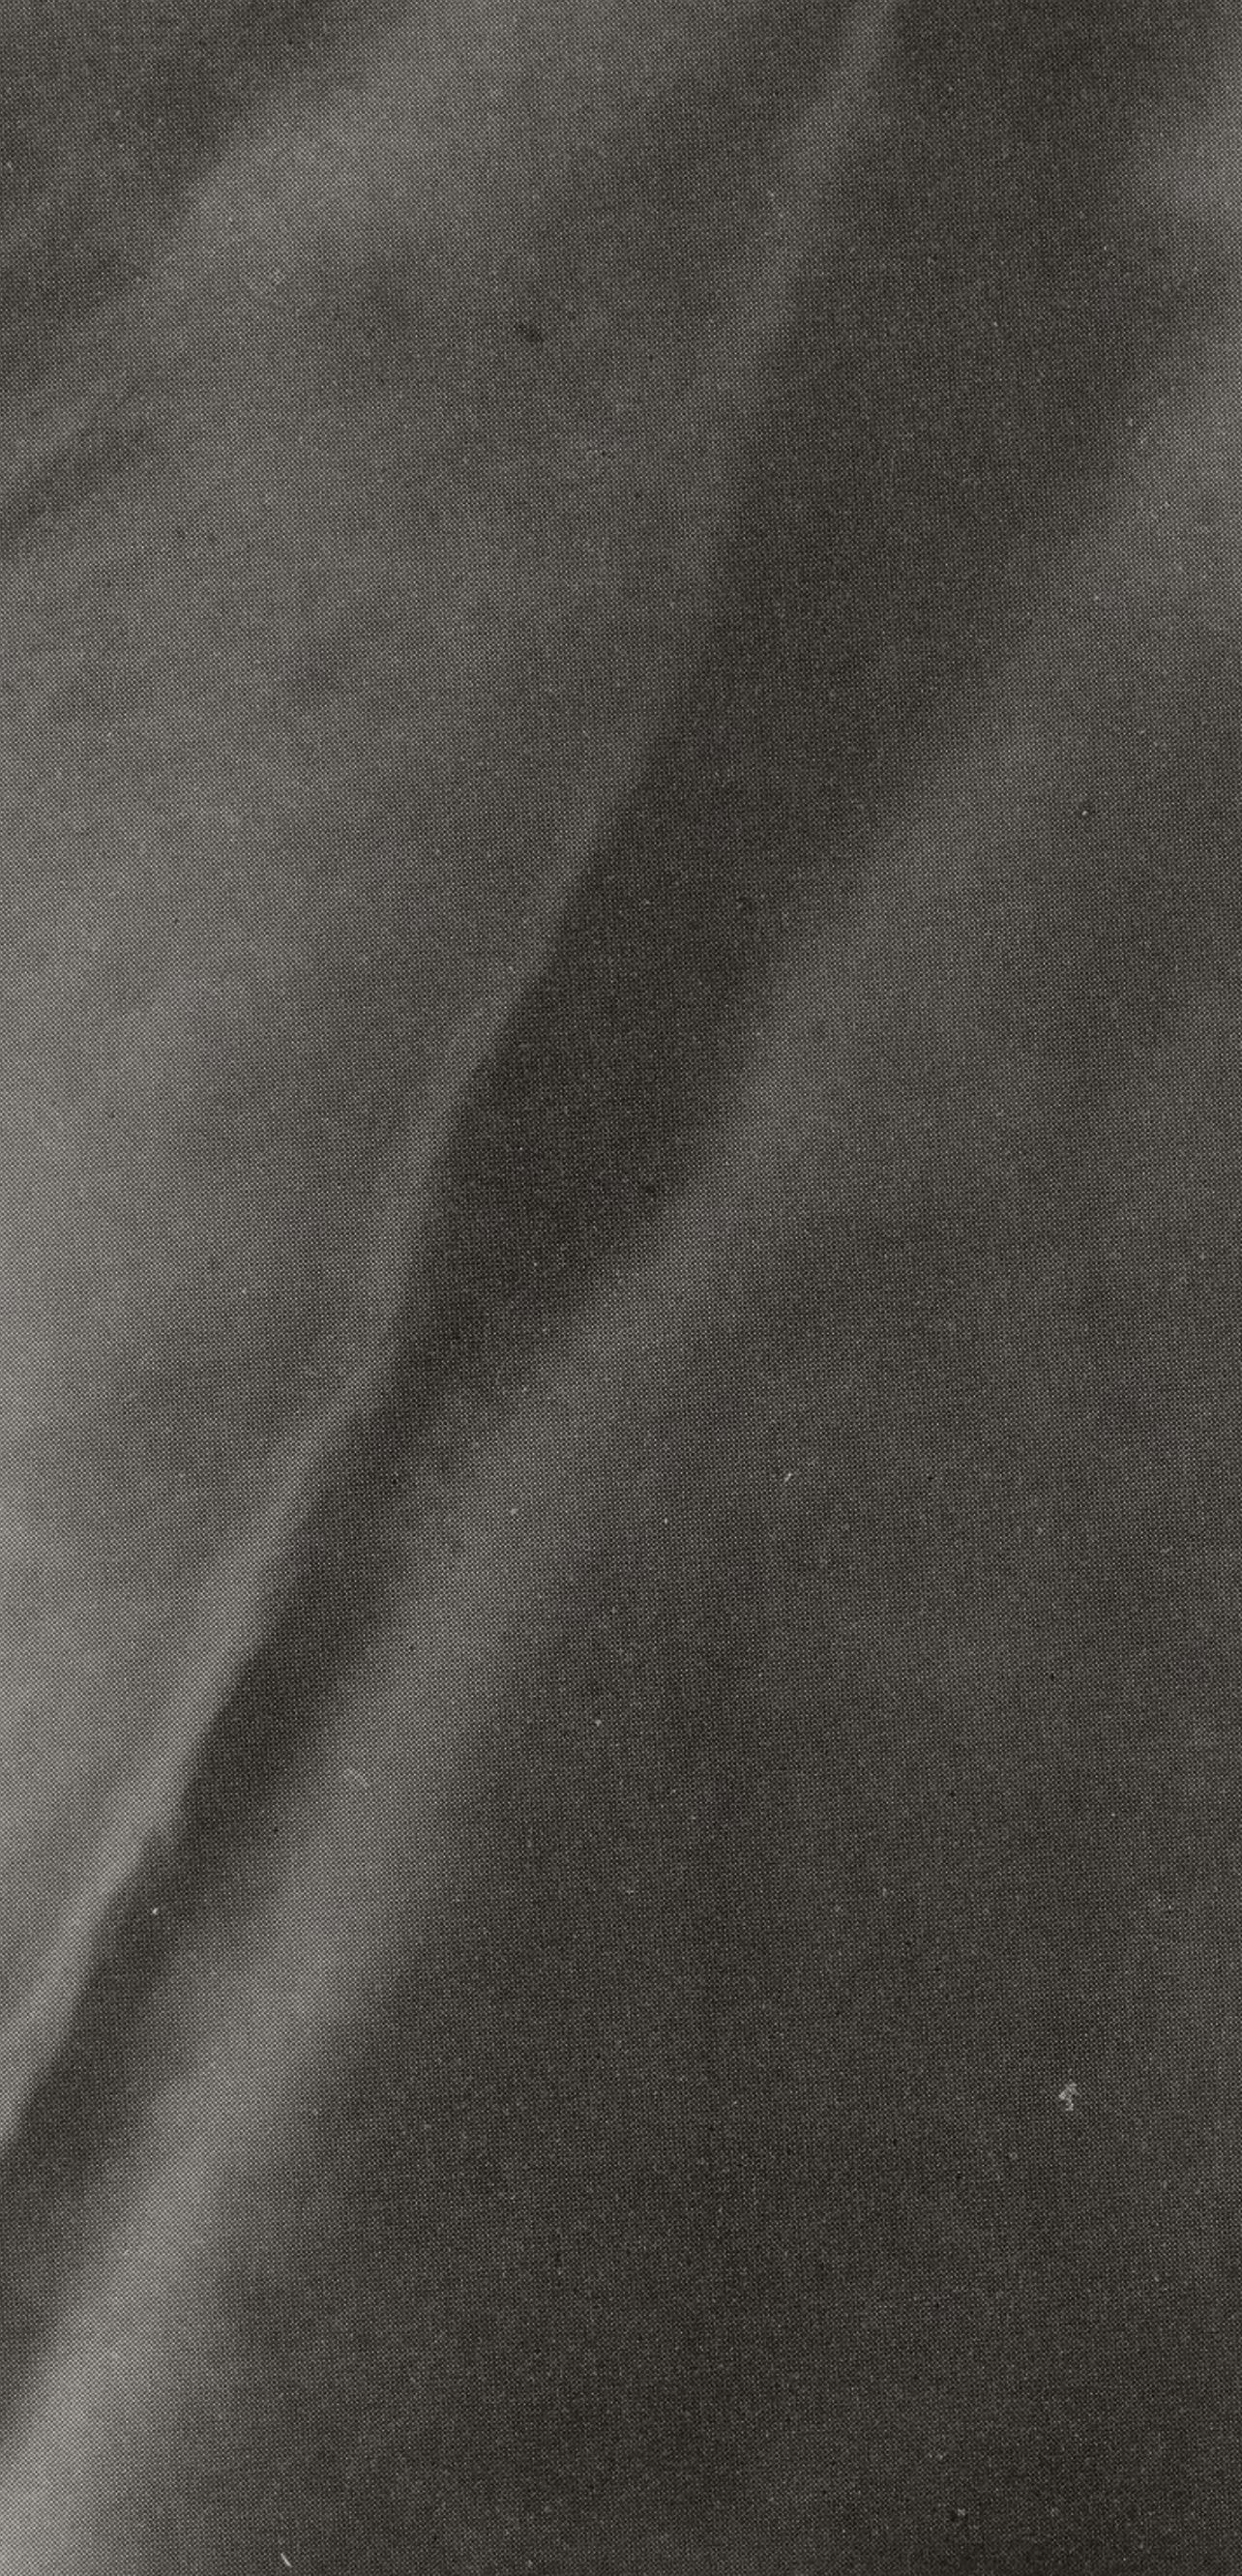 Stieglitz, Sky, Alfred Stieglitz Memorial Portfolio (after) For Sale 3